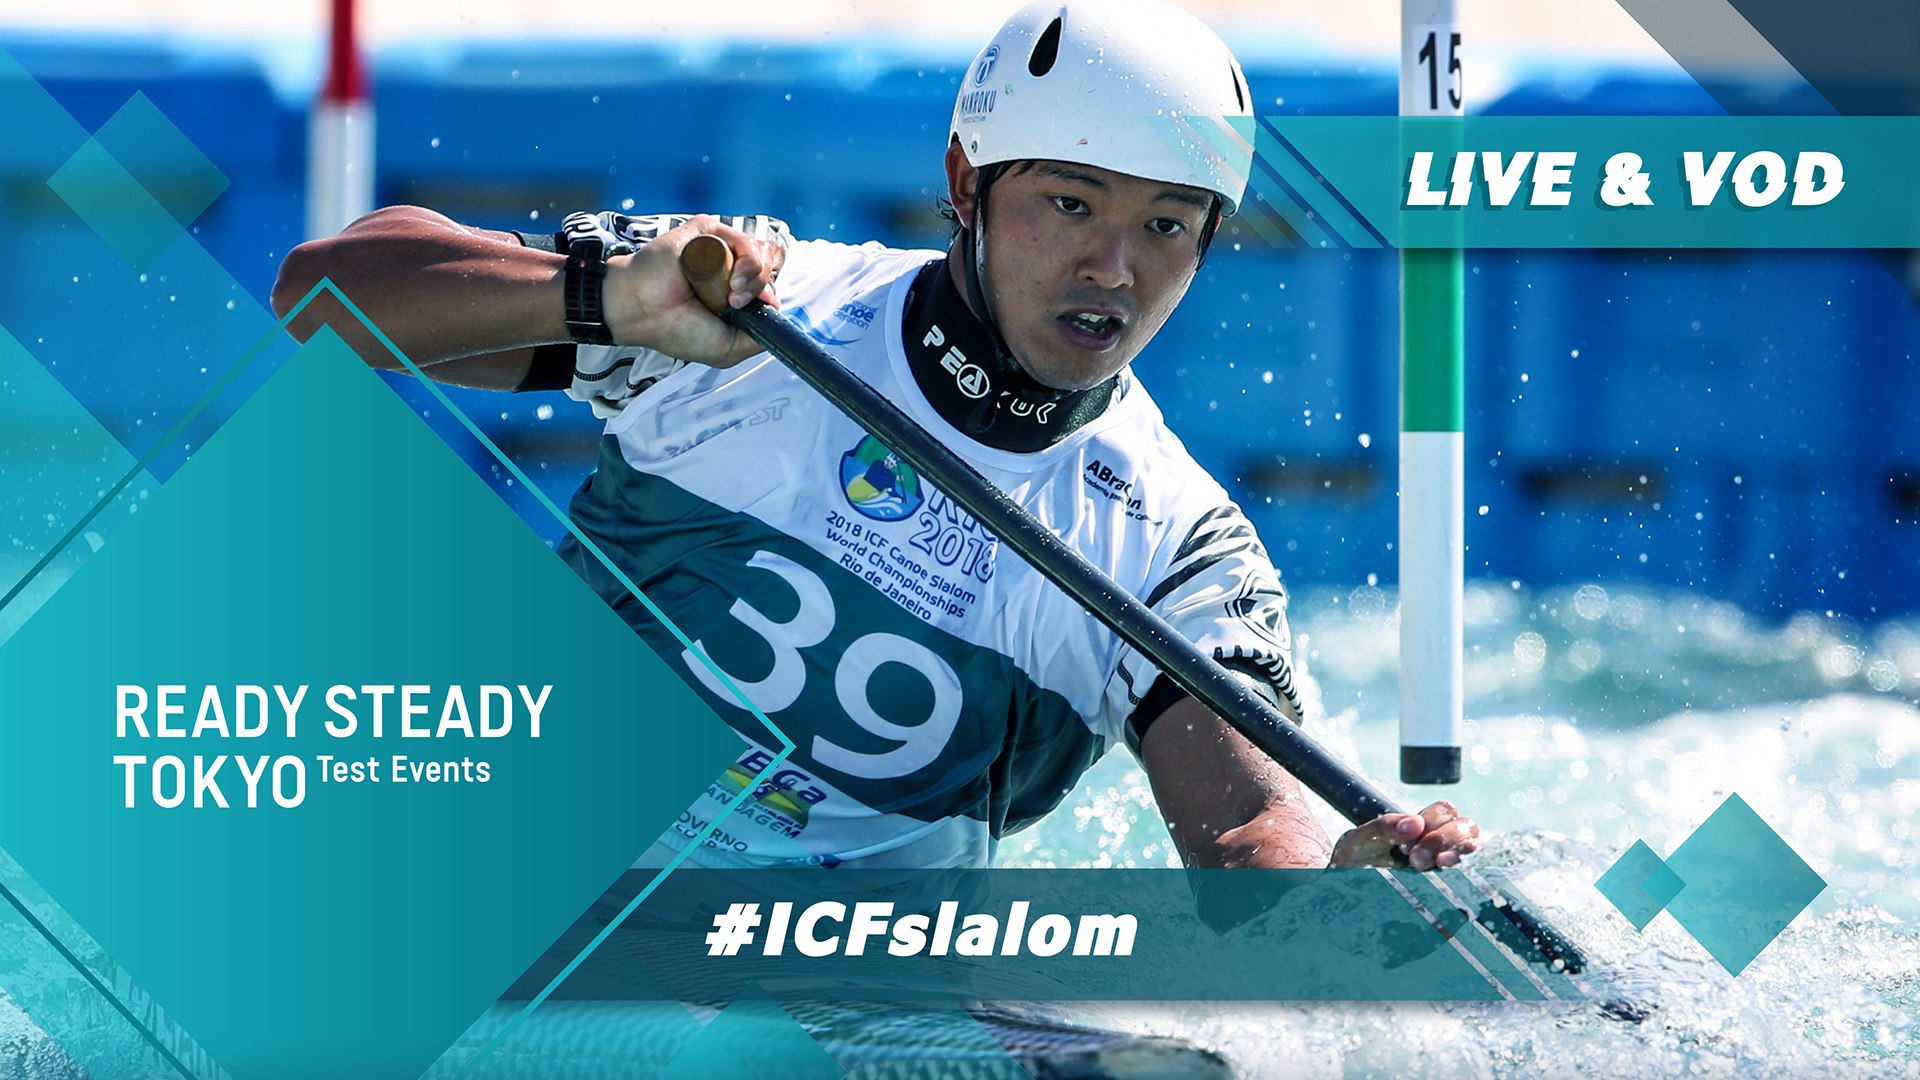 19 Icf Canoe Slalom Tokyo Olympic Test Event Japan Nhk Cup C1w Video Dailymotion